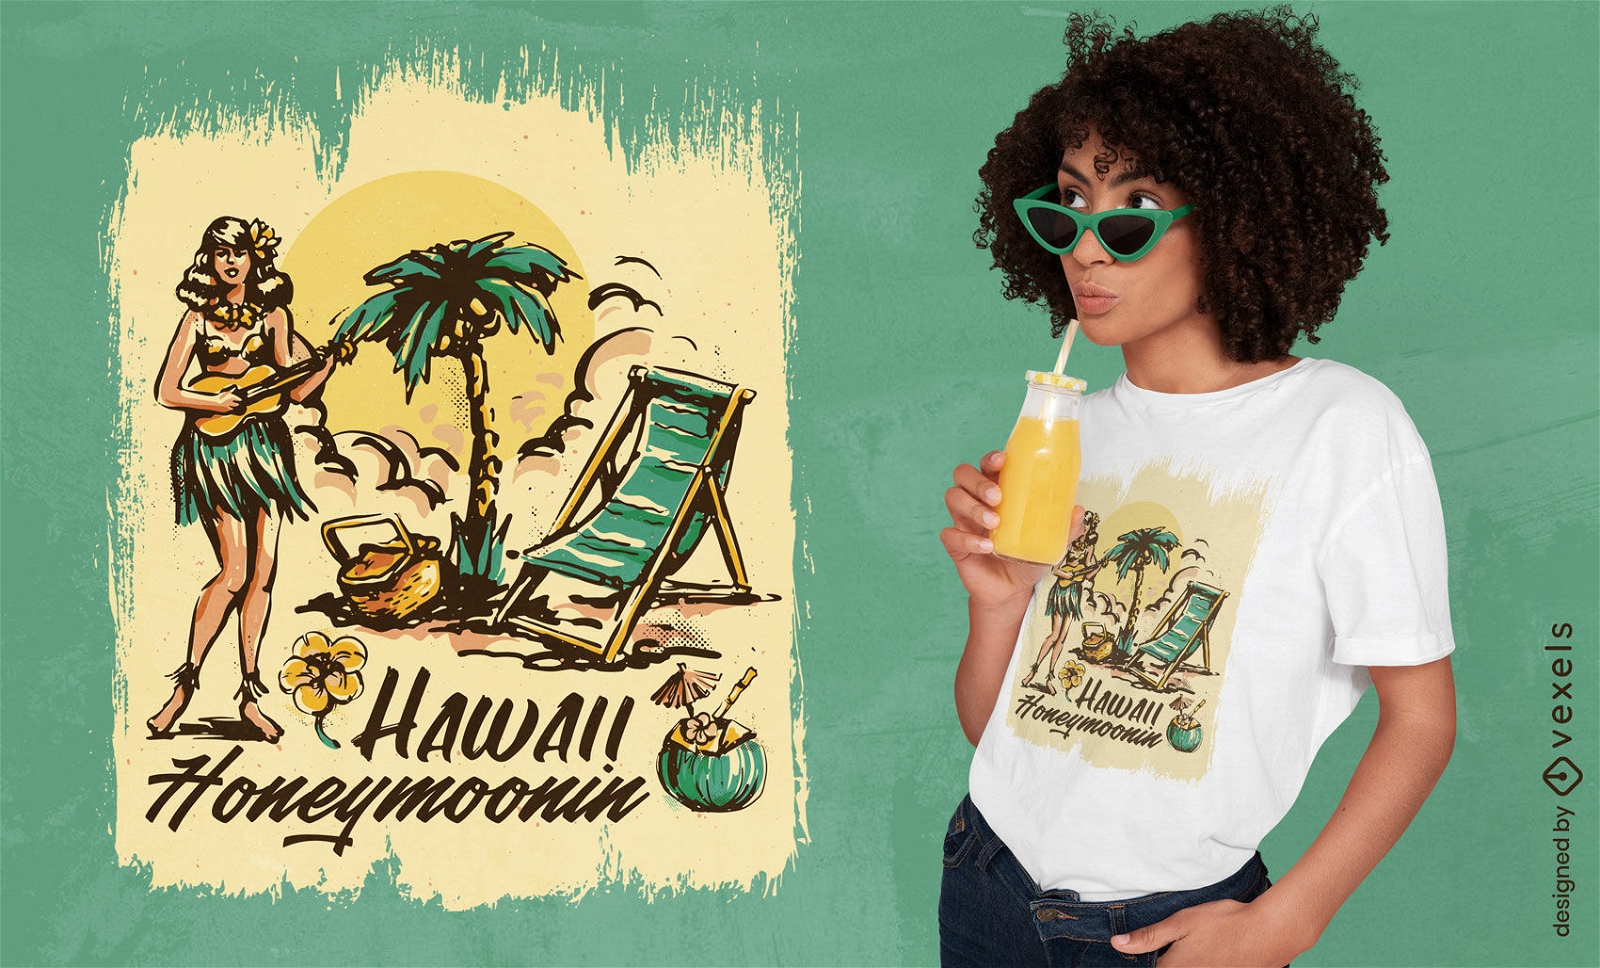 Hawaii holiday vintage t-shirt design